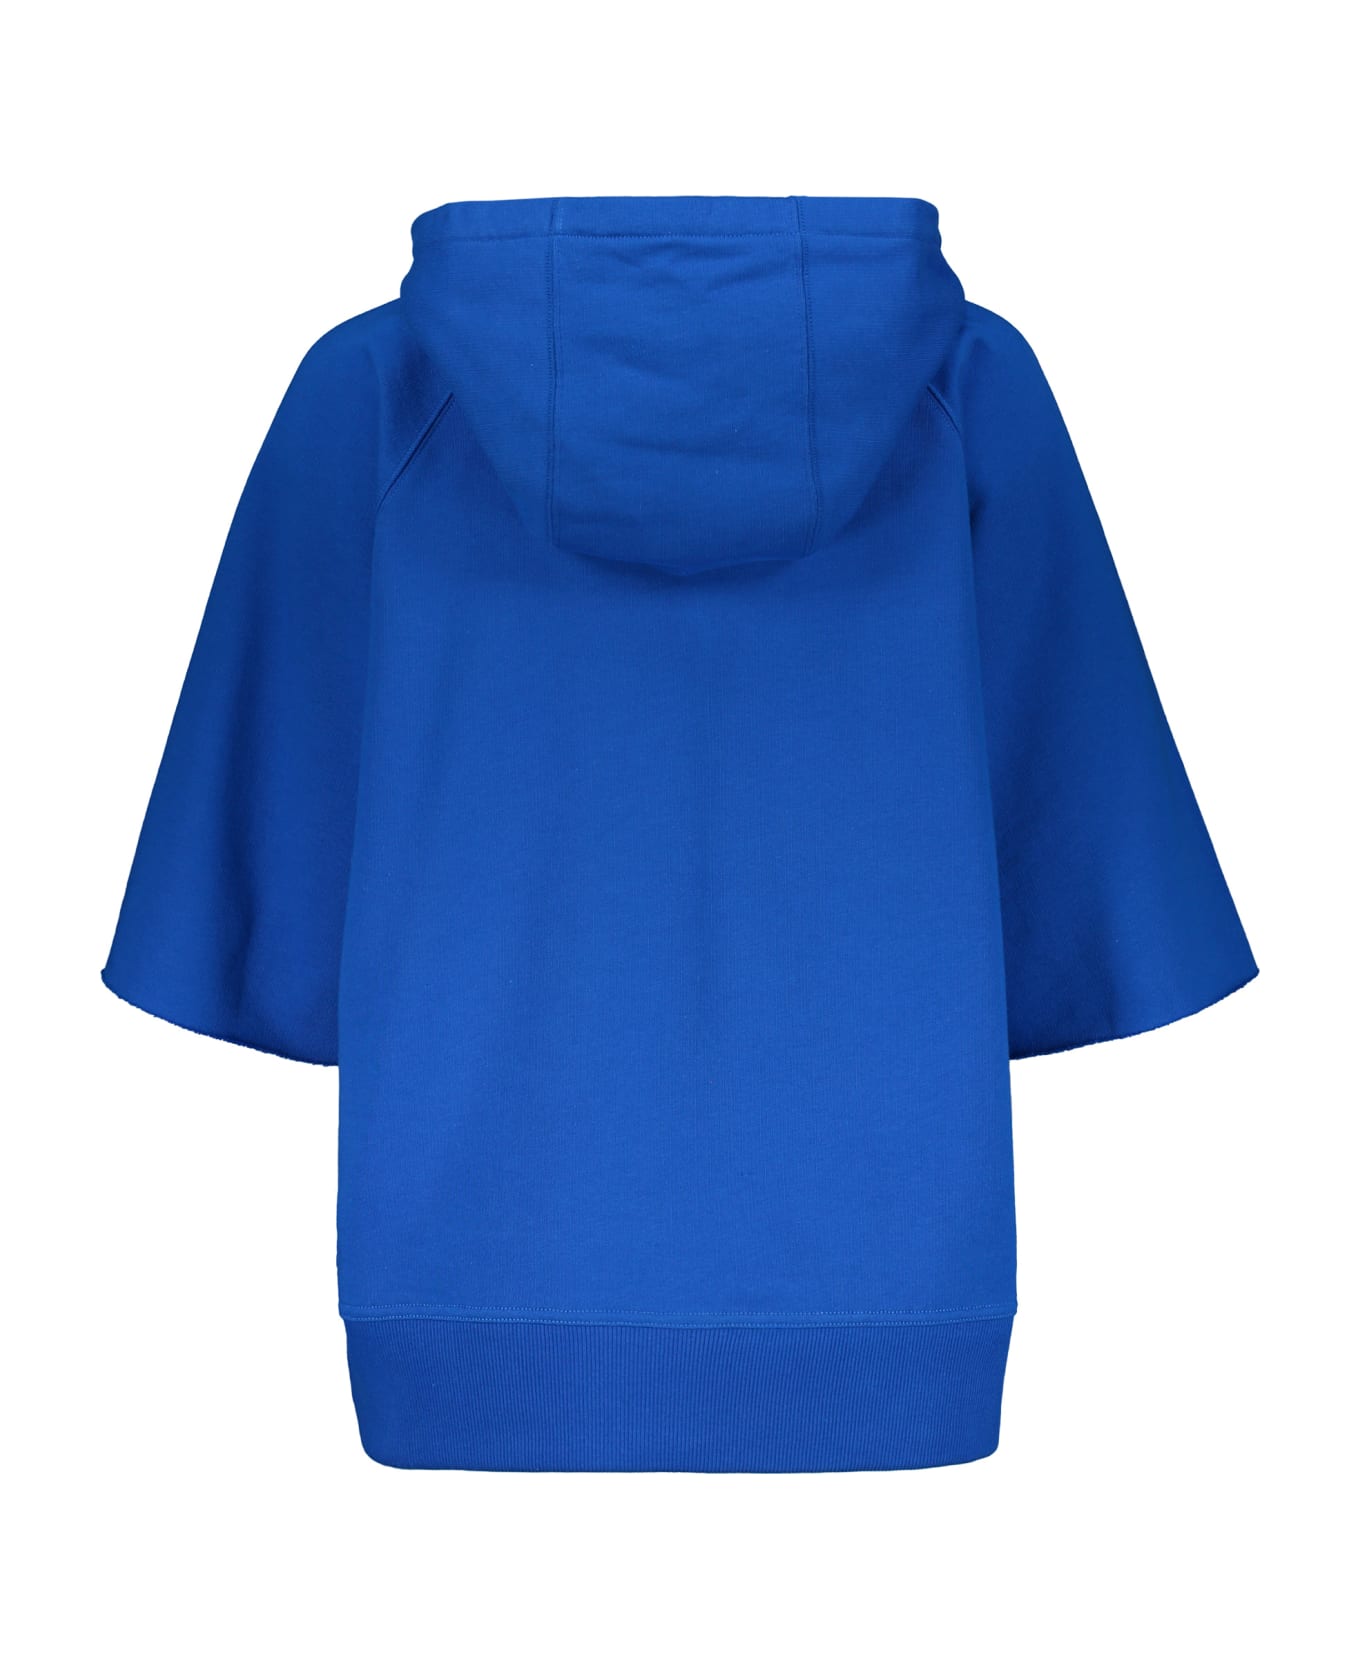 Burberry Short Sleeved Sweatshirt - blue